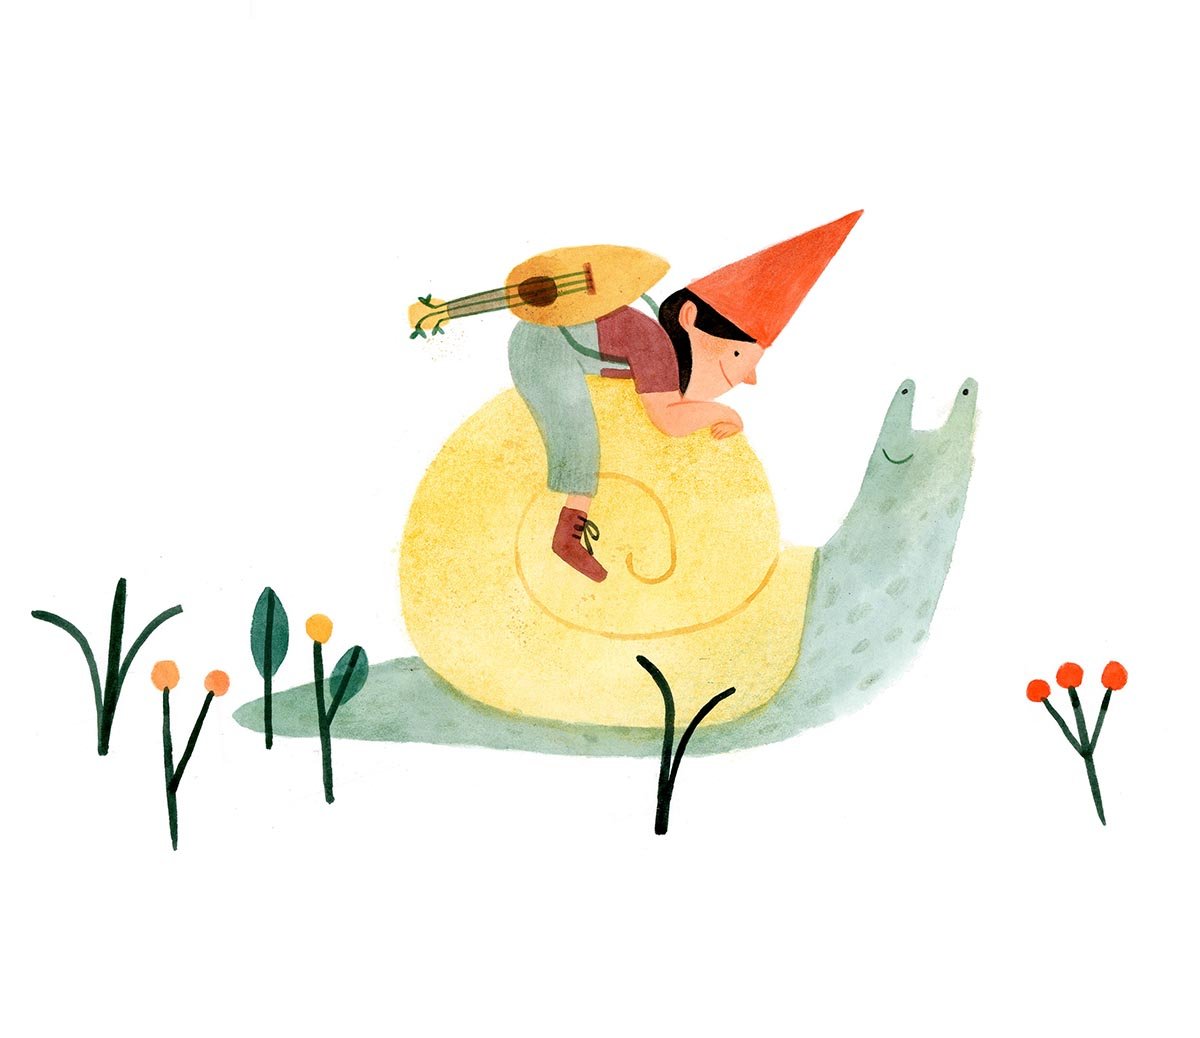 marina-ruiz-gnome-on-snail-illustration.jpg